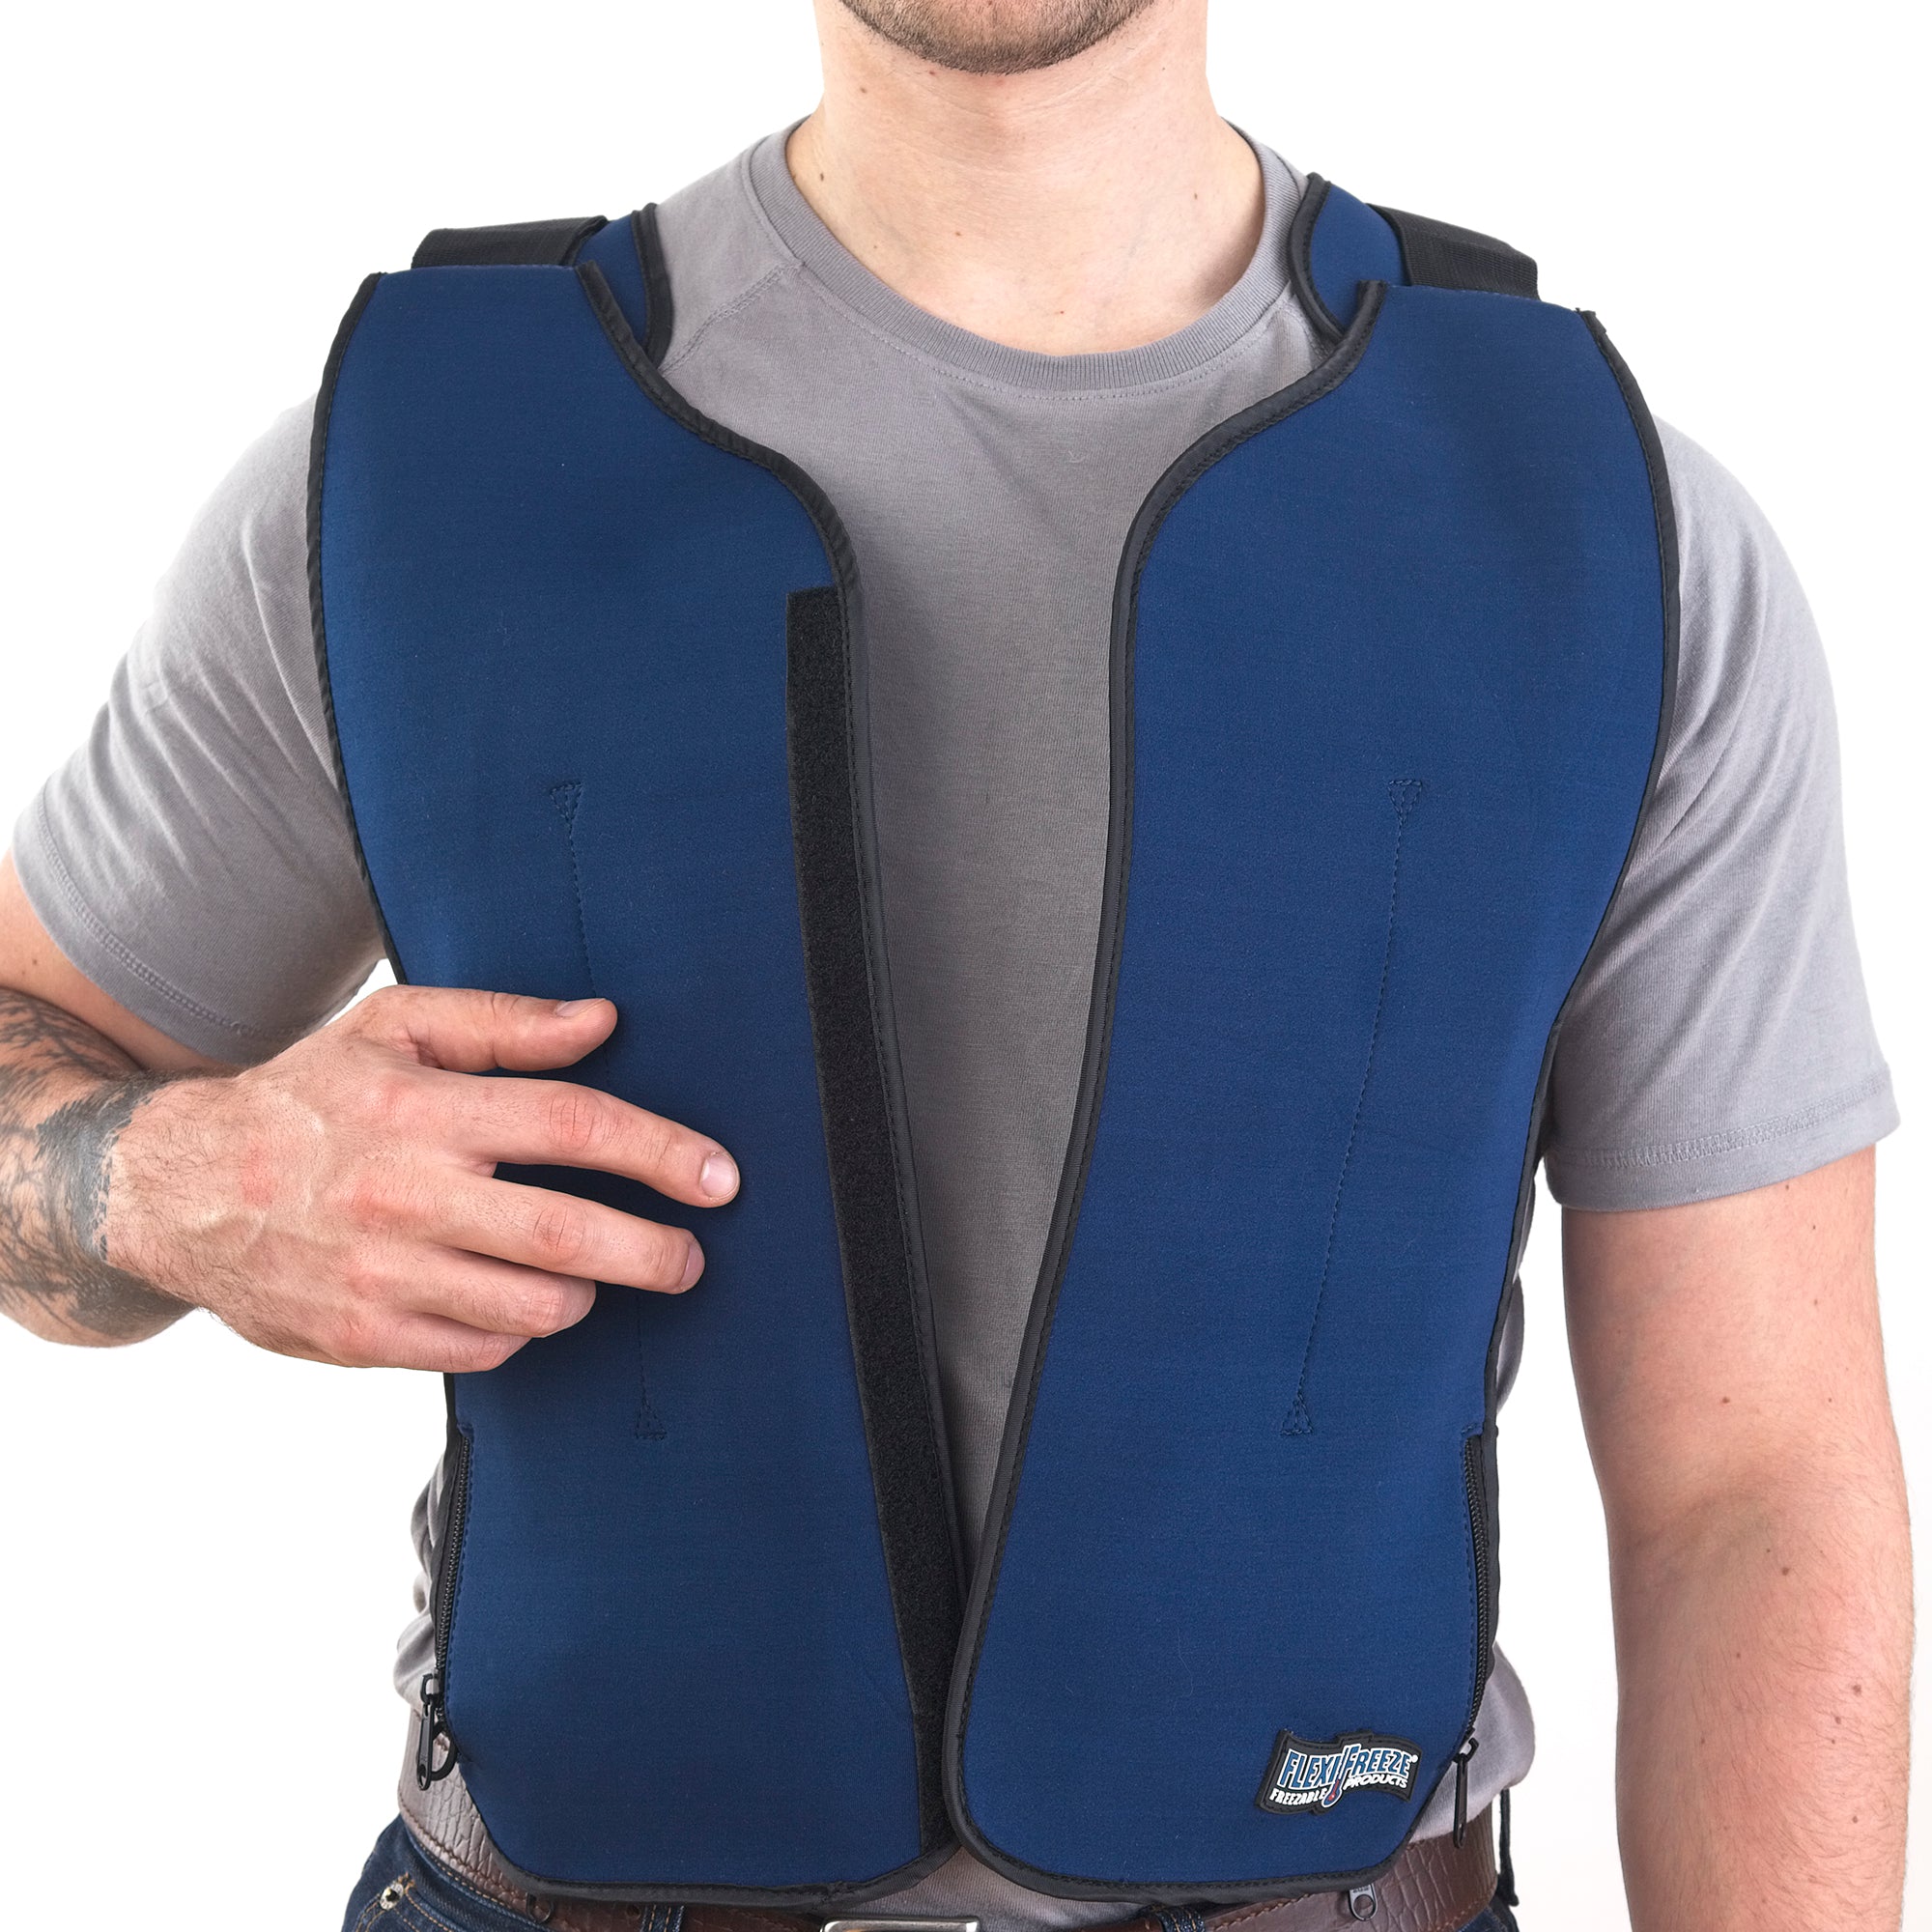 Man wearing FlexiFreeze personal velcro ice vest, blue, open, front view